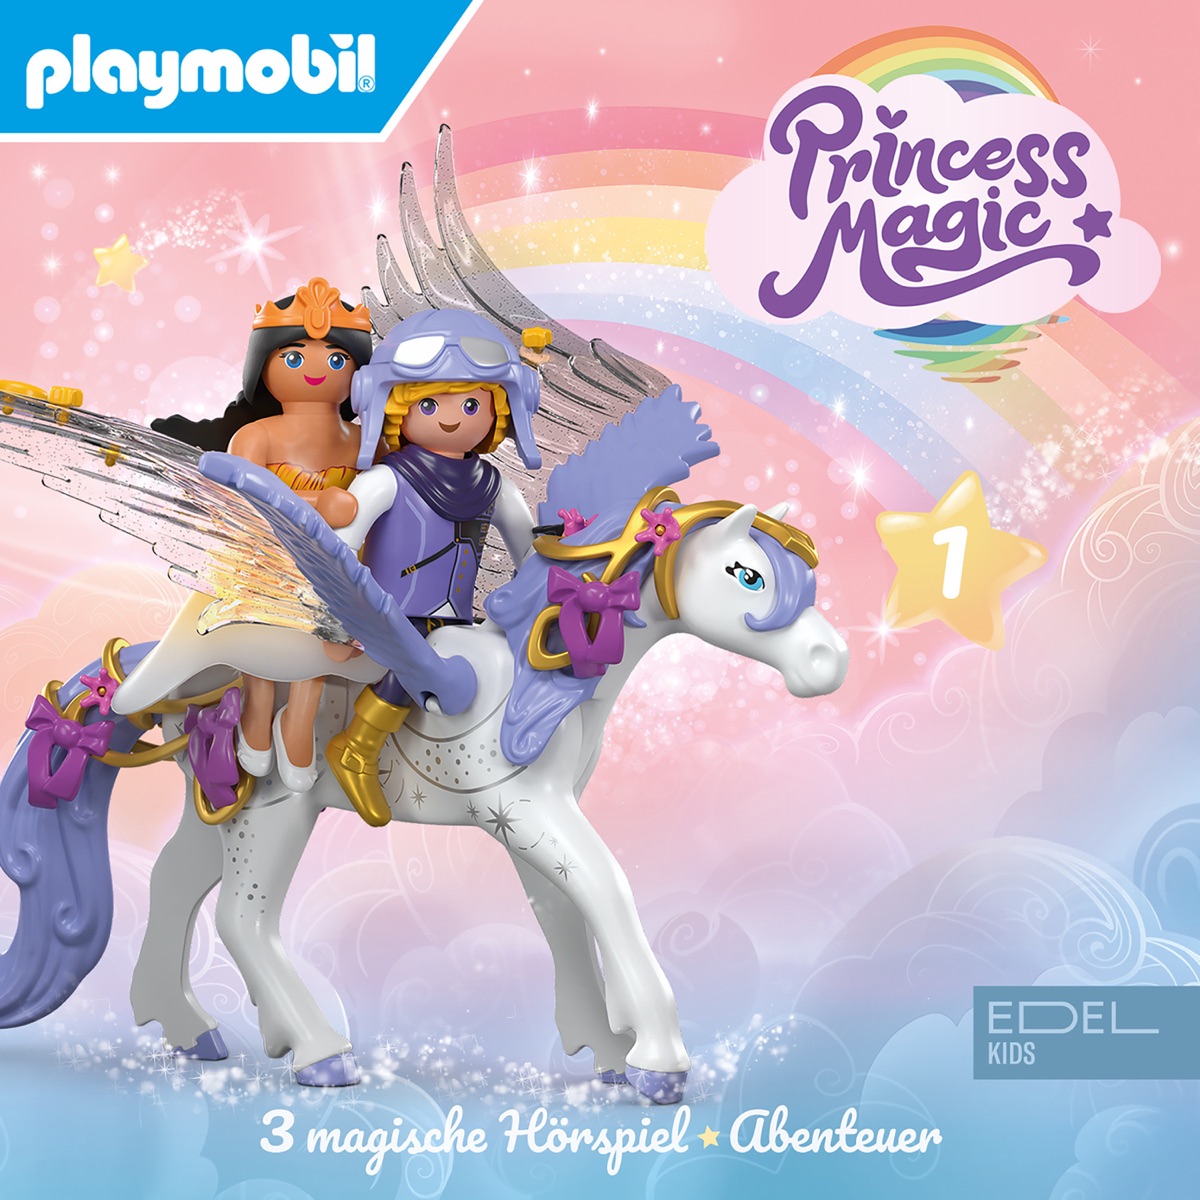 Folge 1 (Das magische Hörspiel-Abenteuer) - Album by Playmobil - Princess  Magic - Apple Music